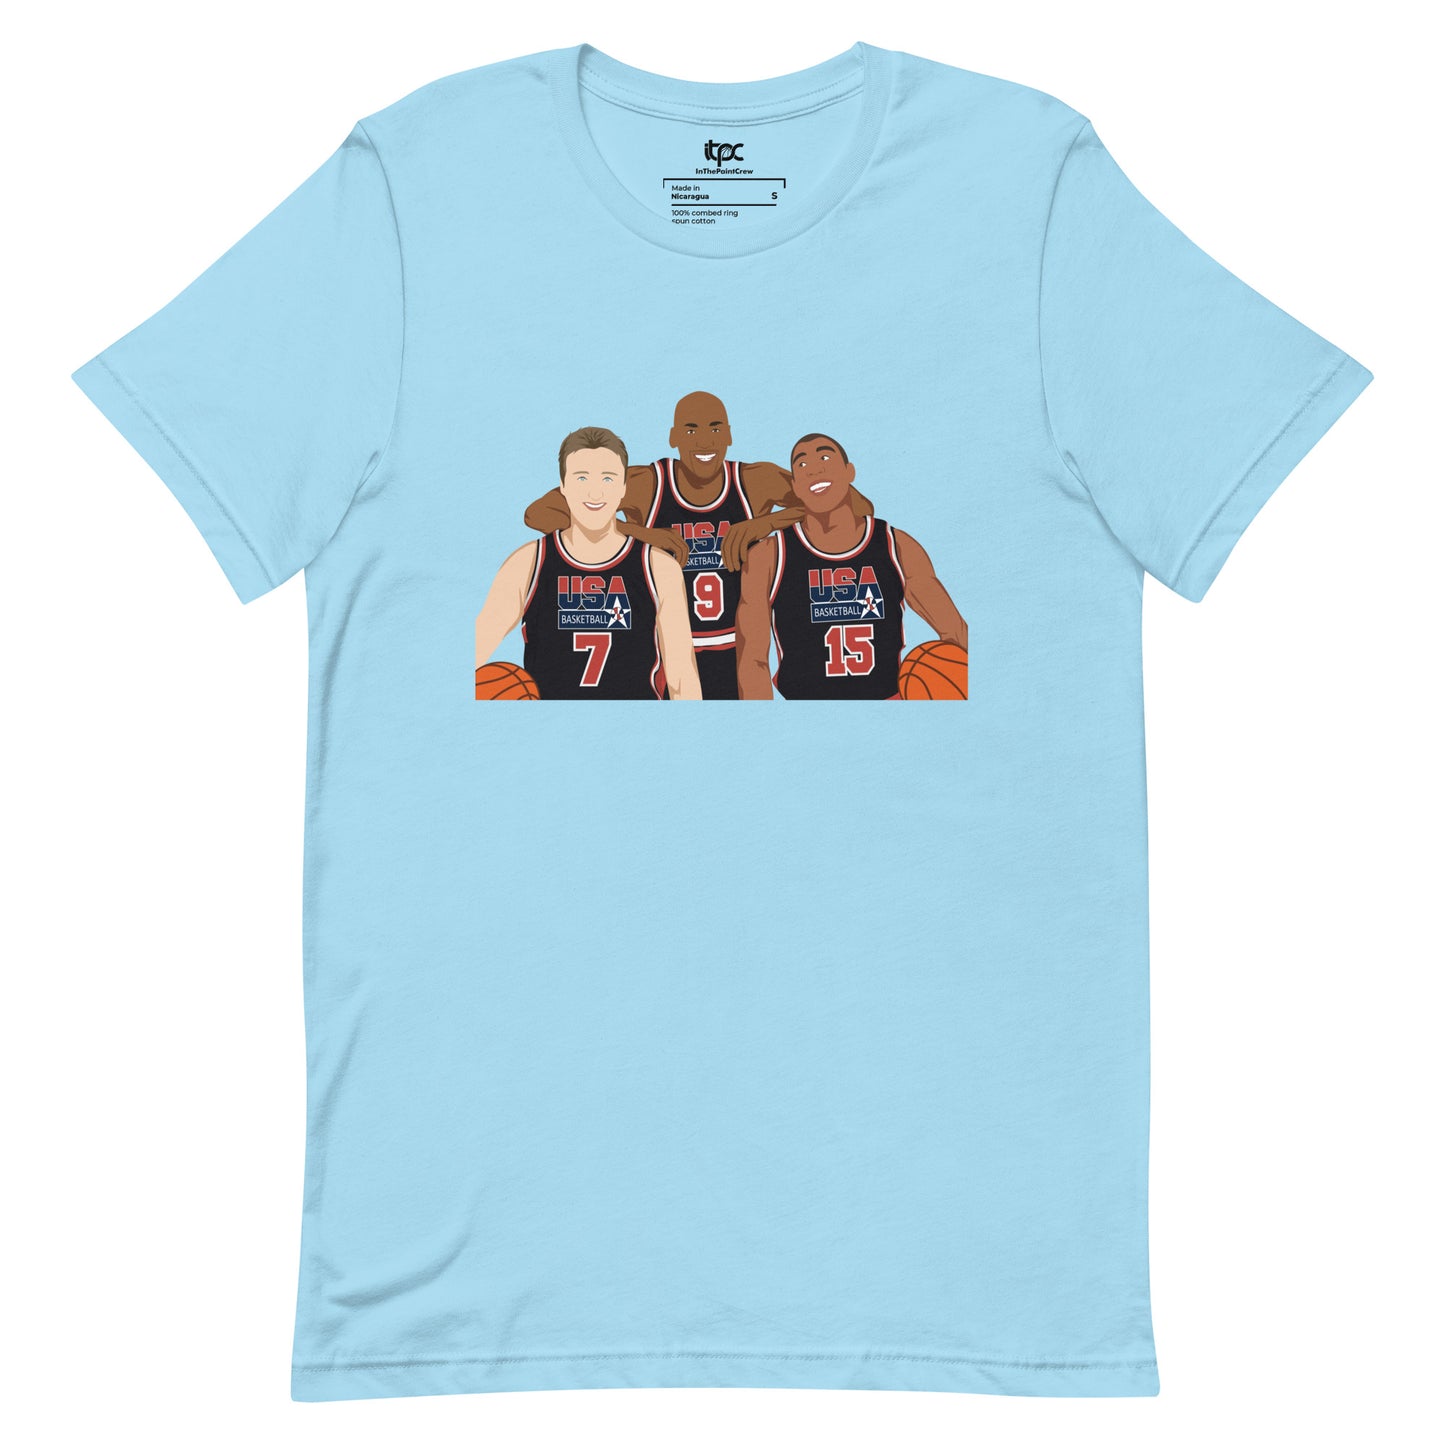 Dream Team - "Big 3" t-shirt